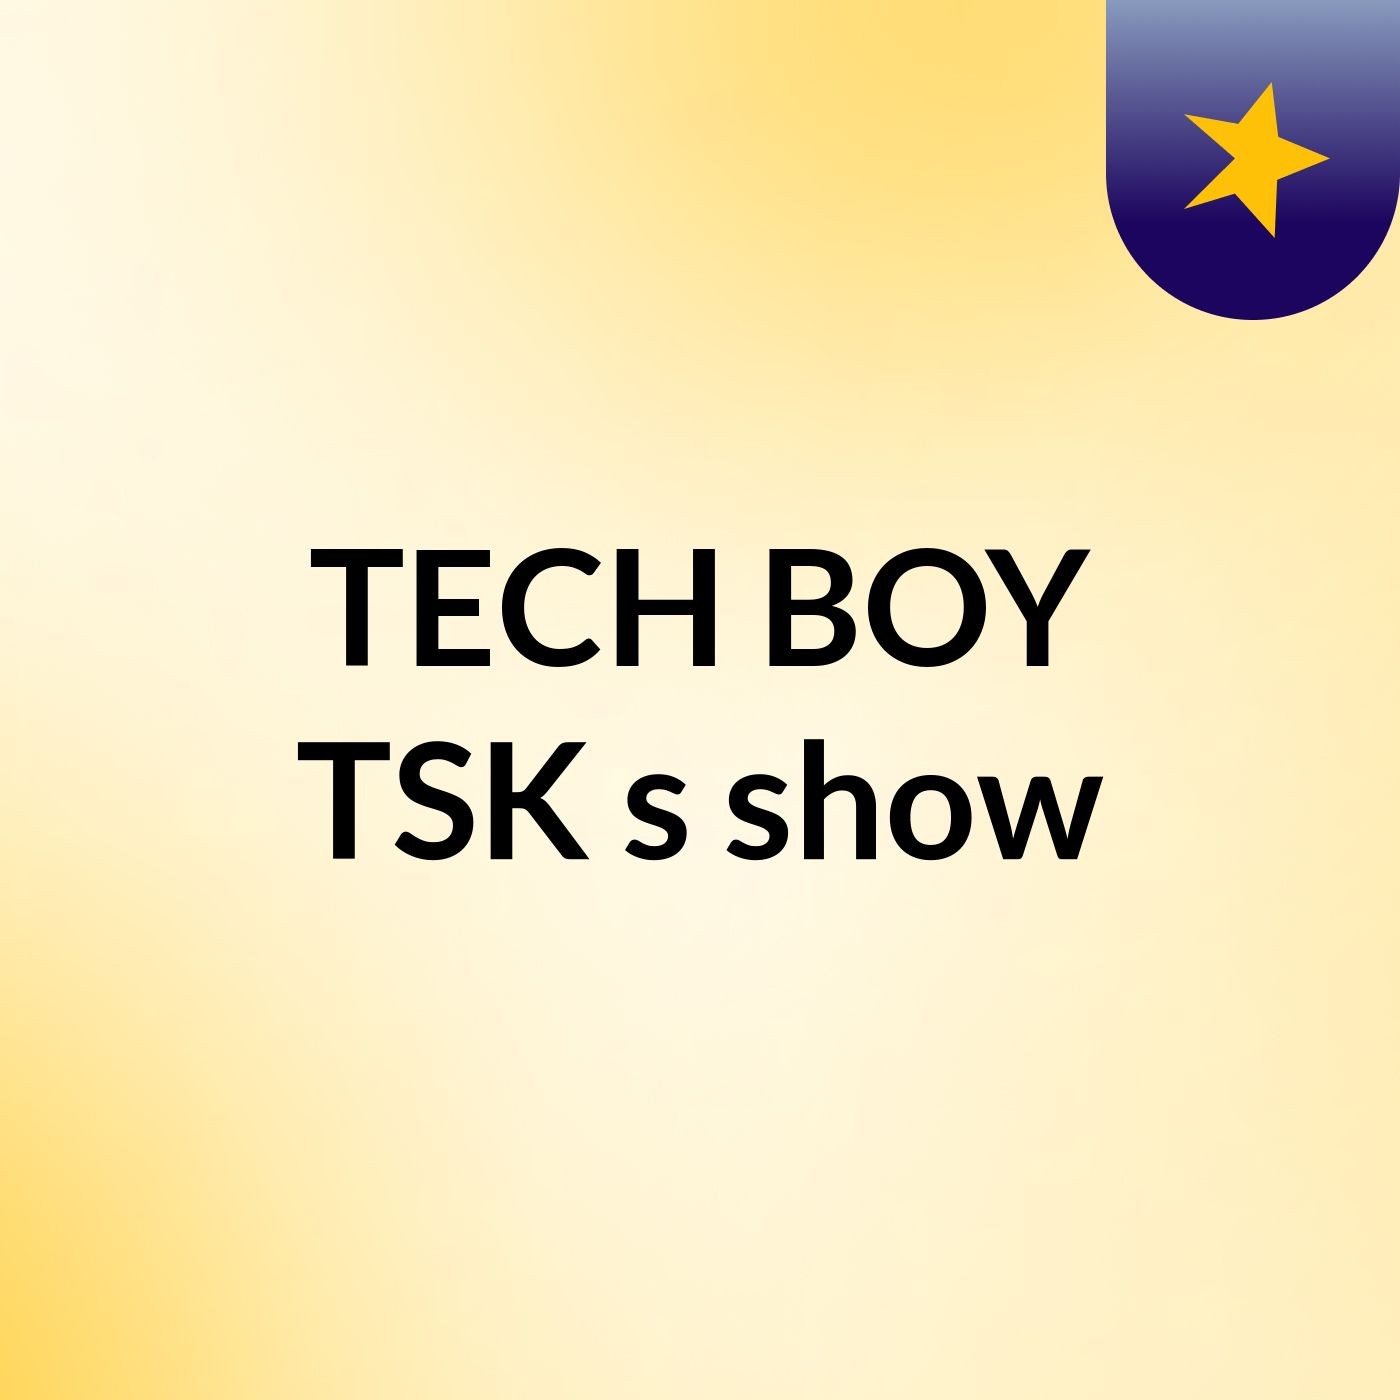 TECH BOY TSK's show:TECH BOY TSK